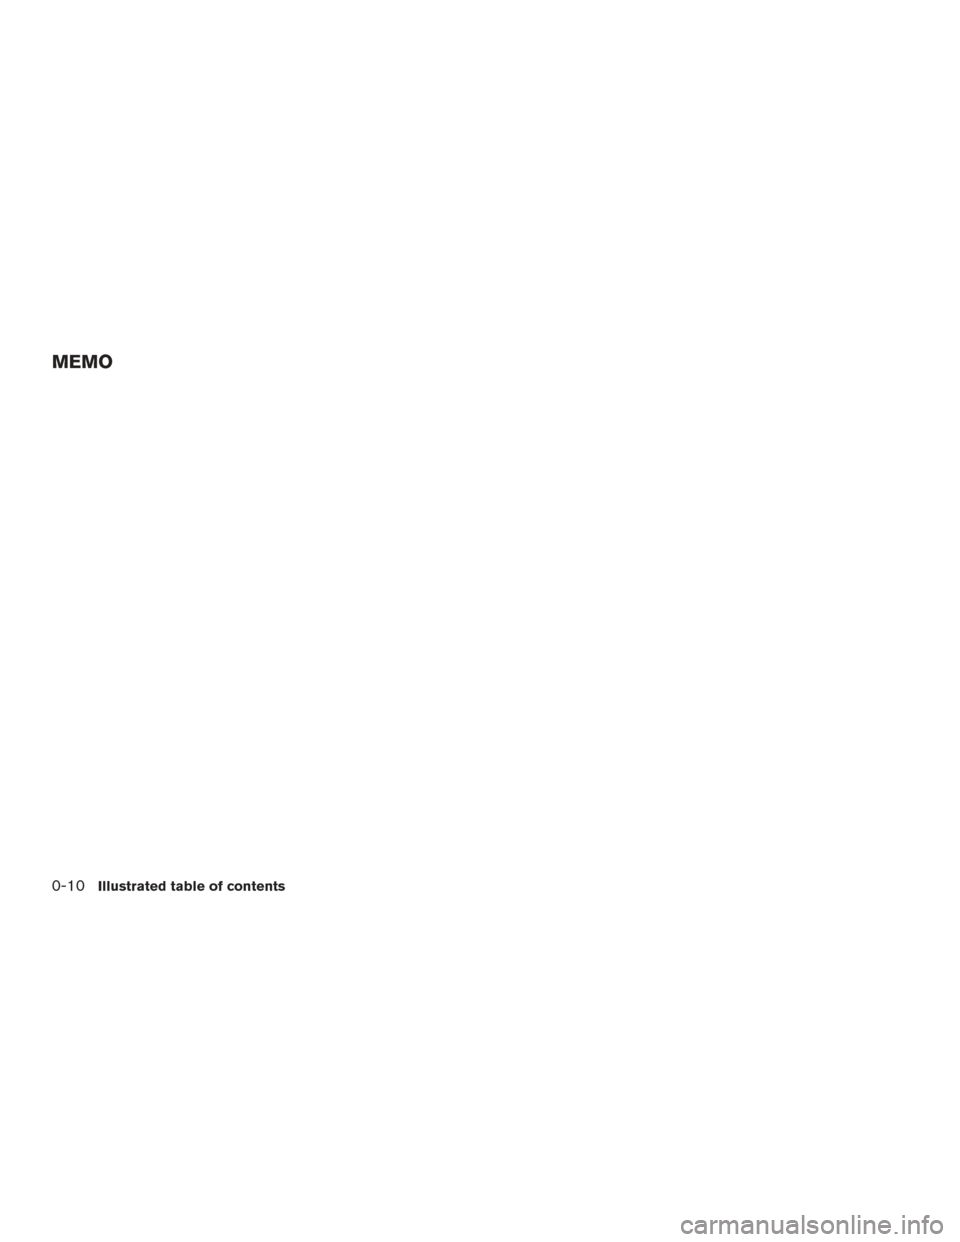 NISSAN VERSA SEDAN 2015 2.G User Guide MEMO
0-10Illustrated table of contents 